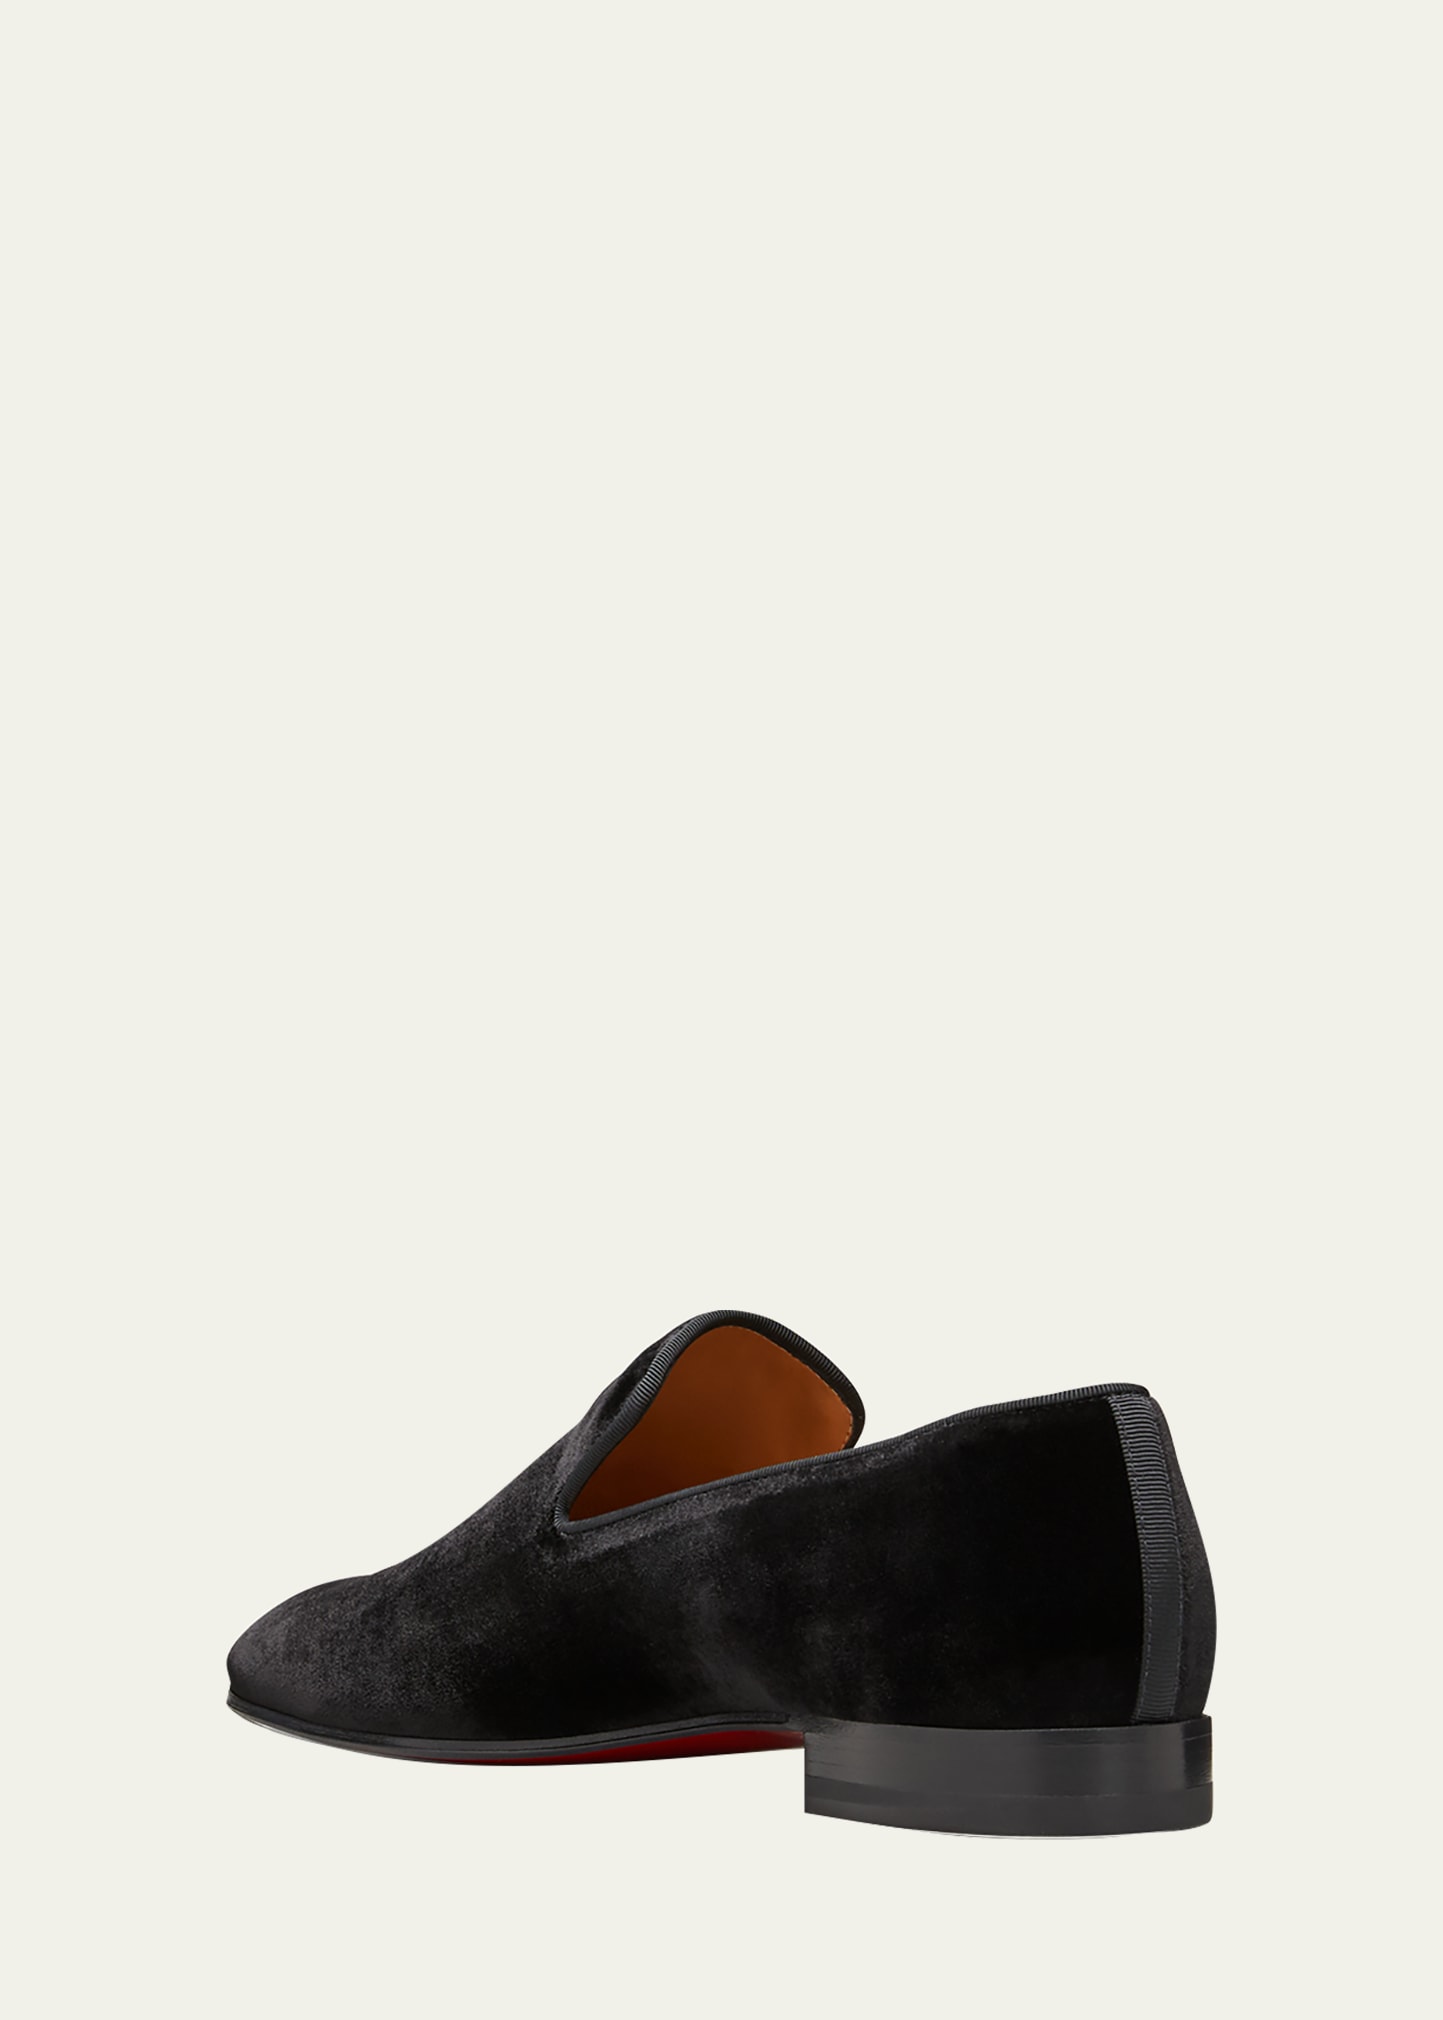  Christian Louboutin Shoes For Men